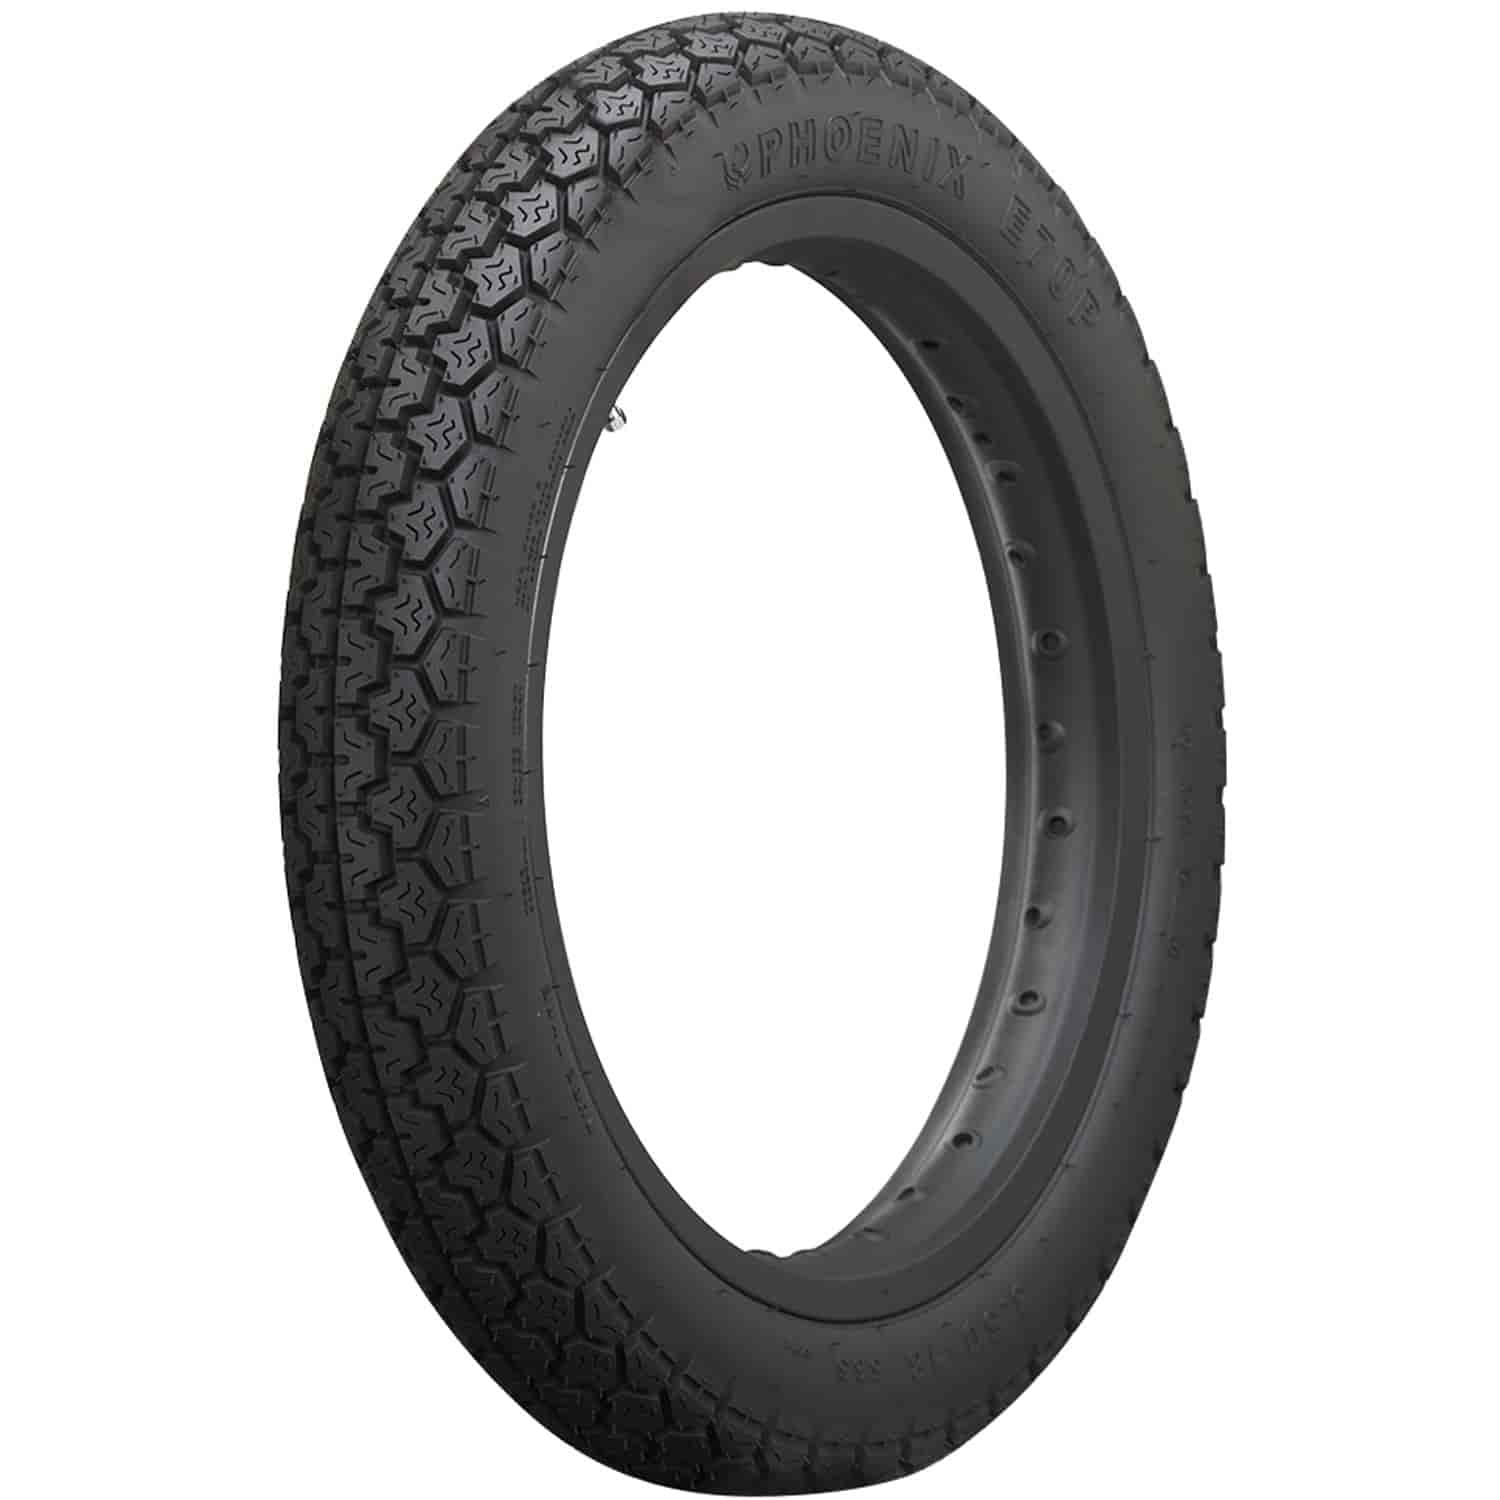 Phoenix E81P Motorcycle Tire: 410-19